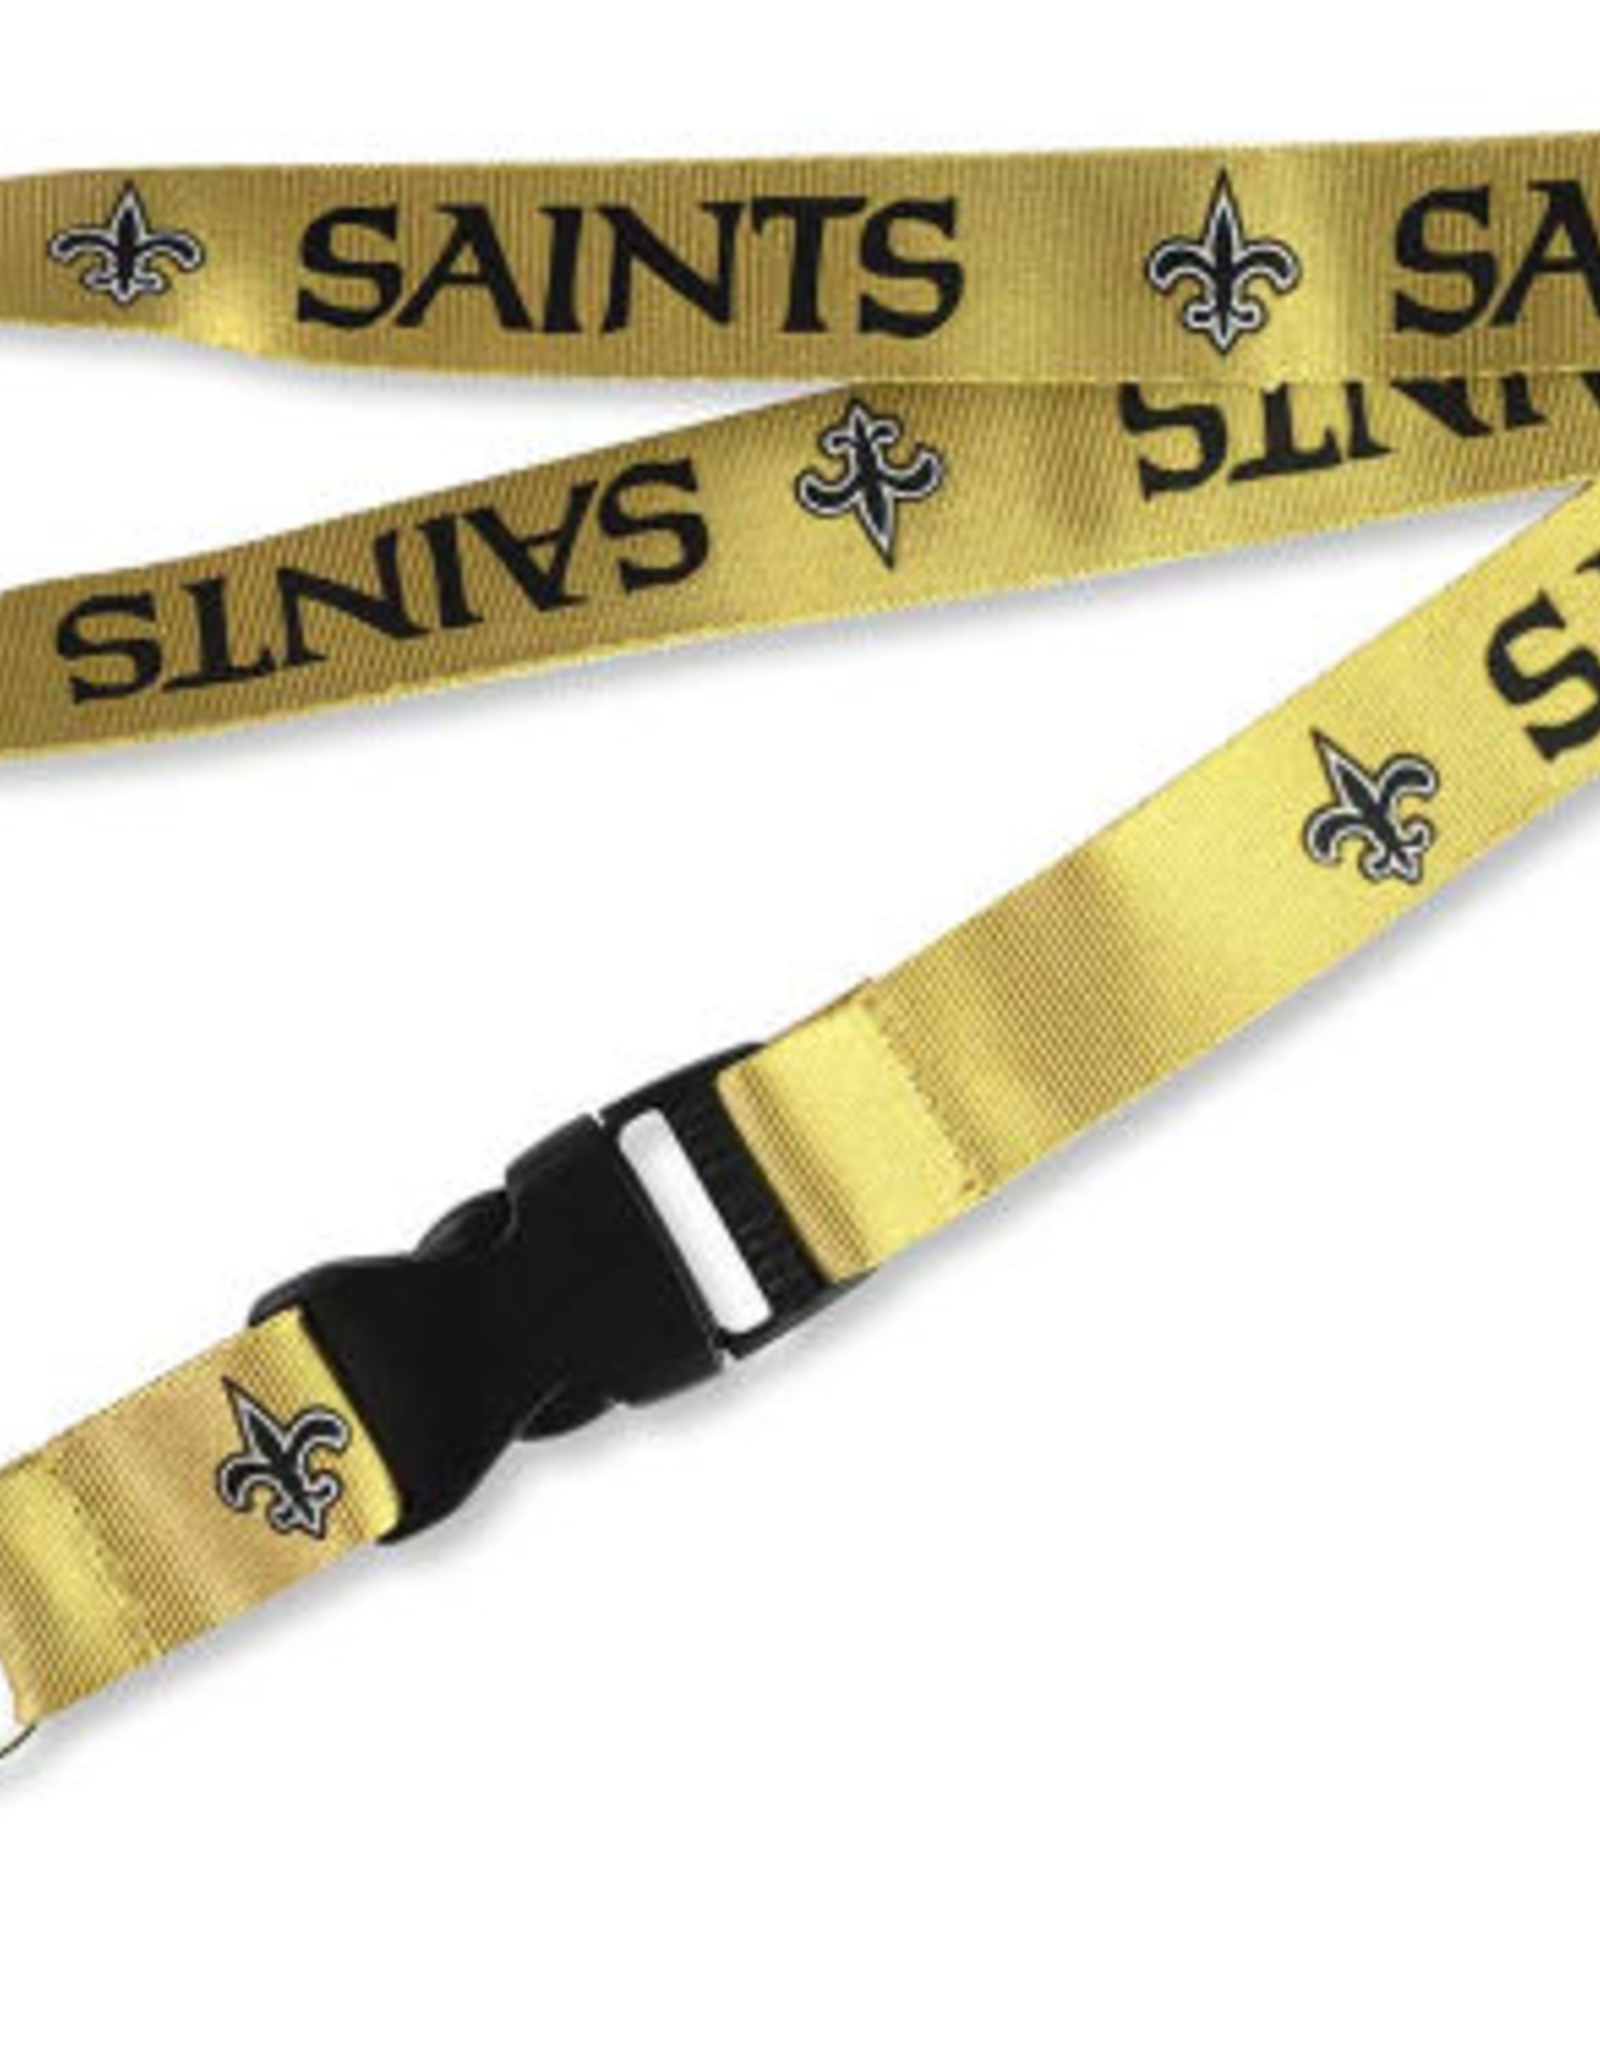 Aminco New Orleans Saints Team Lanyard / Gold